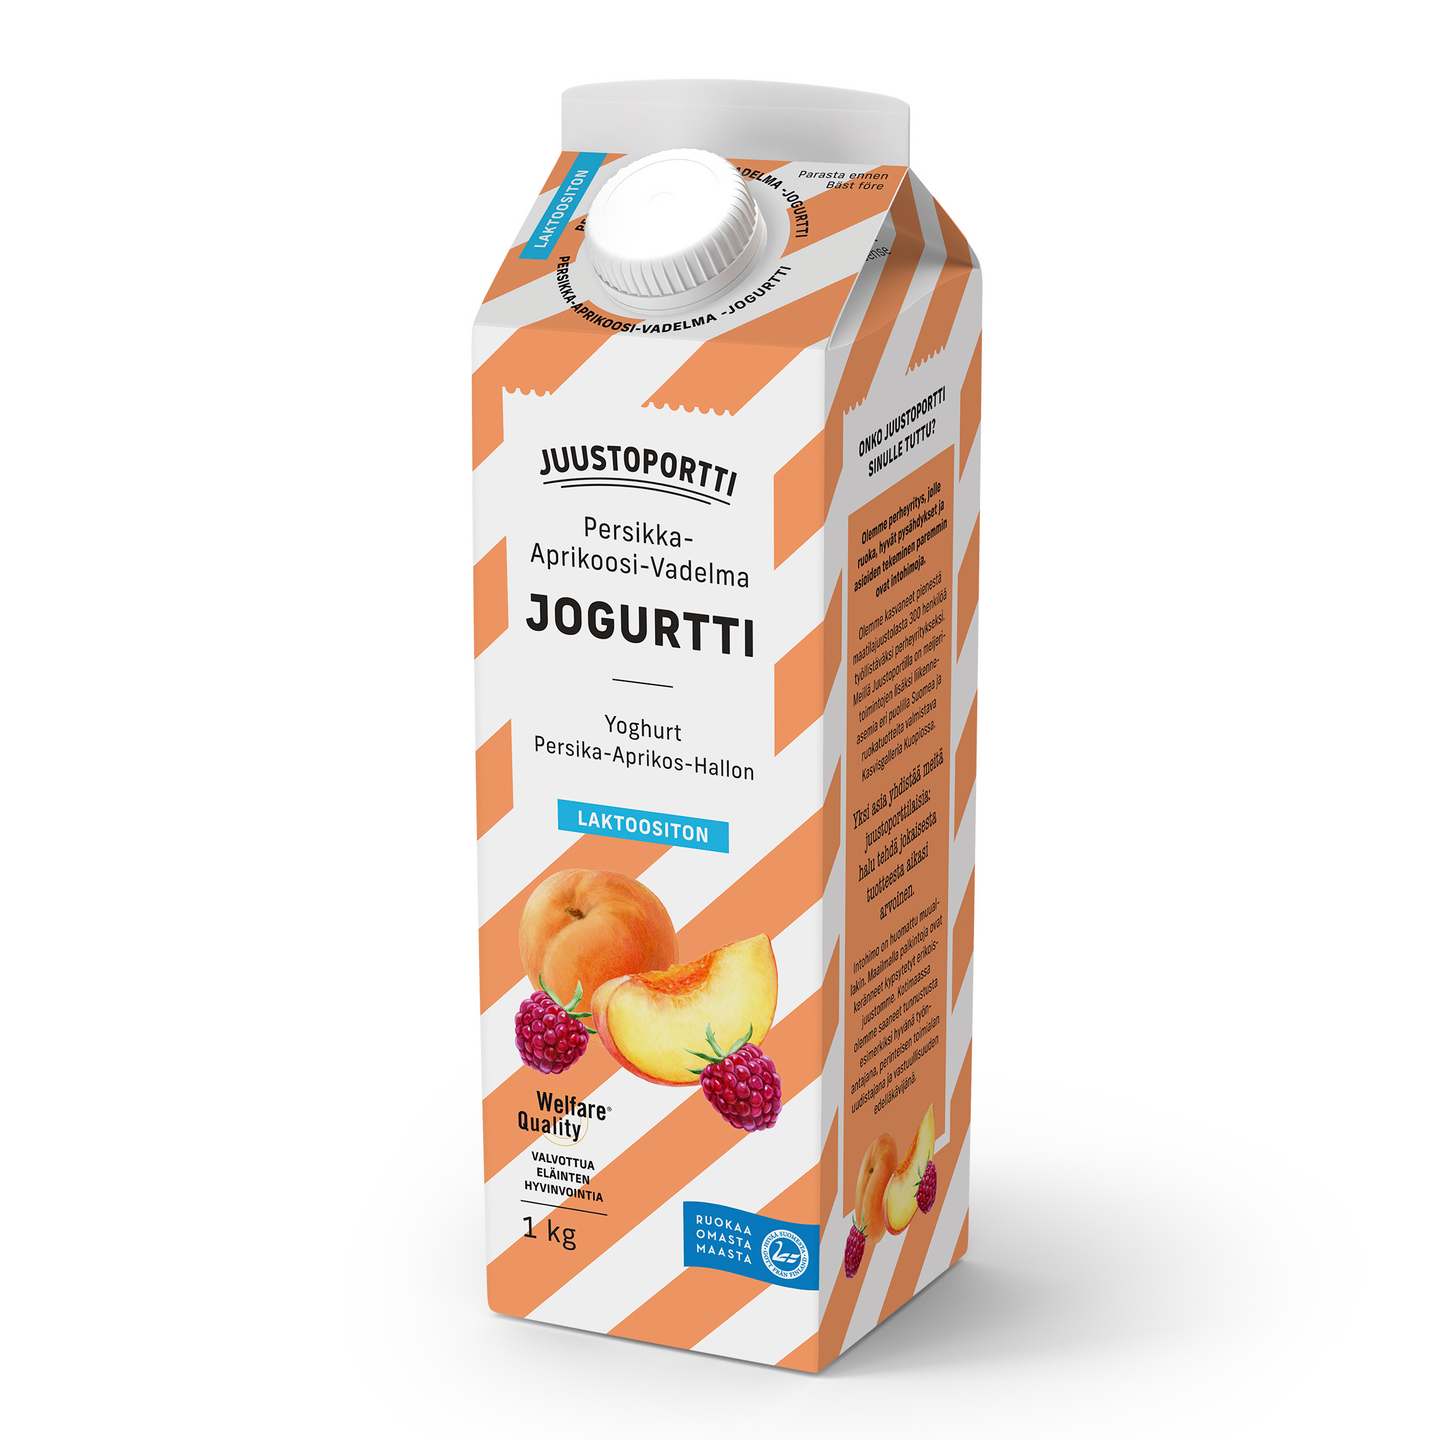 Juustoportti jogurtti 1kg persikka-aprikoosi-vadelma laktoositon